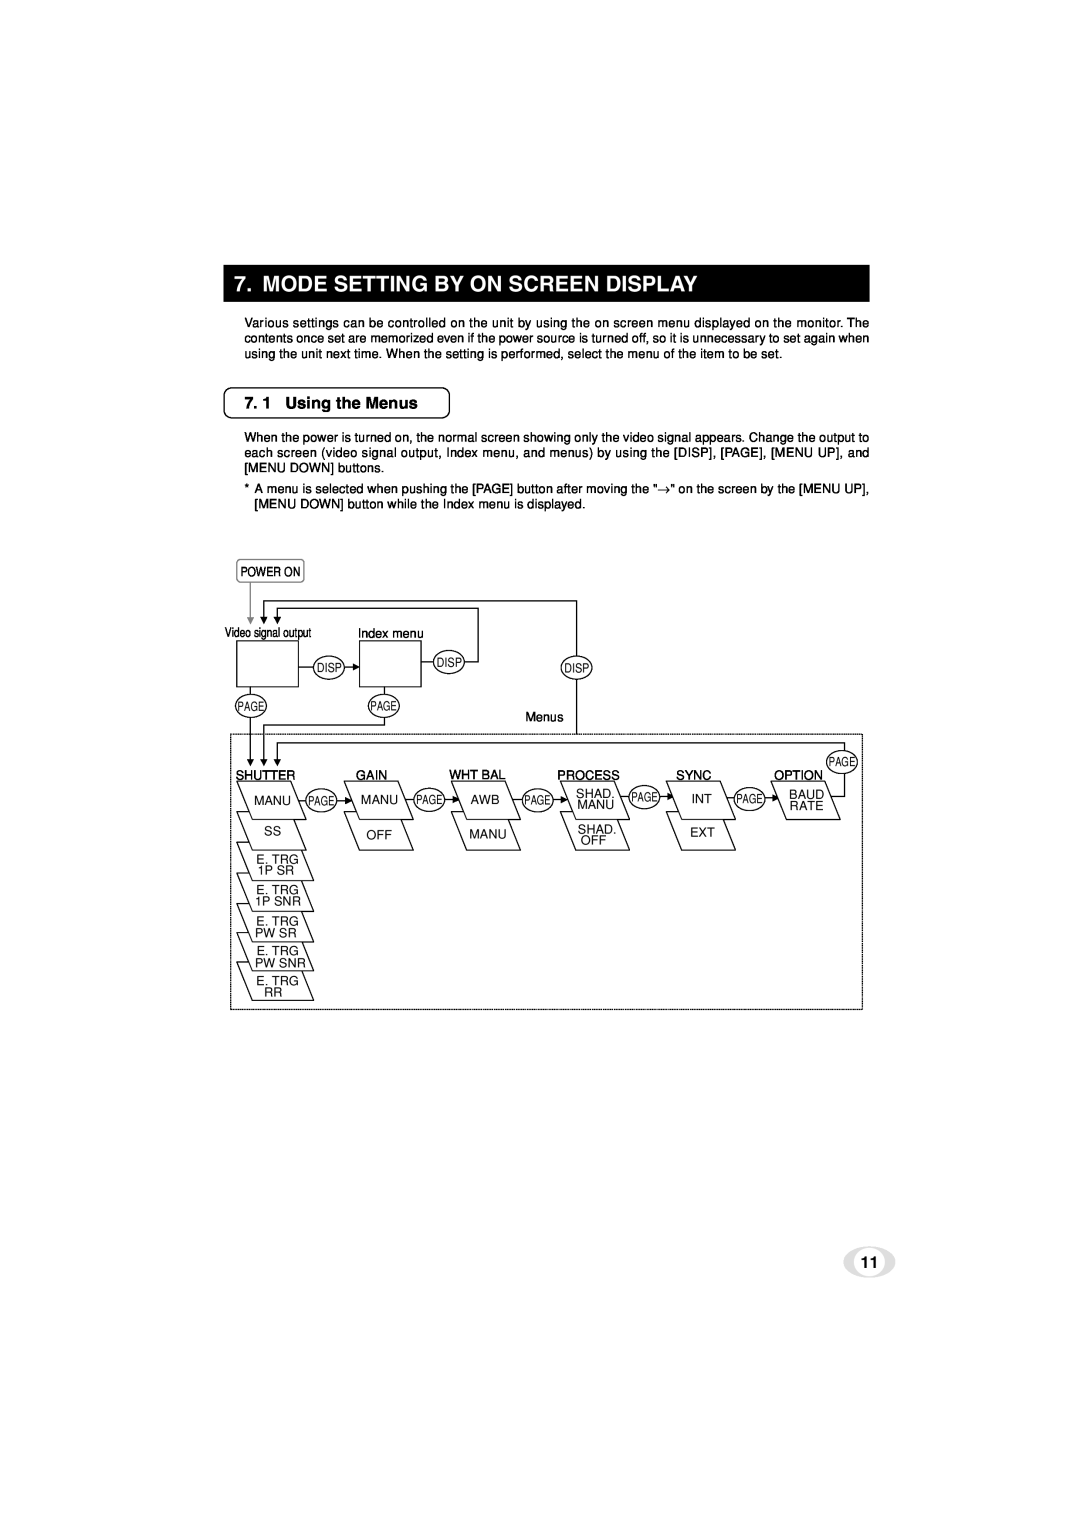 Toshiba IK-TF5C instruction manual Mode Setting By On Screen Display, 7. 1 Using the Menus 